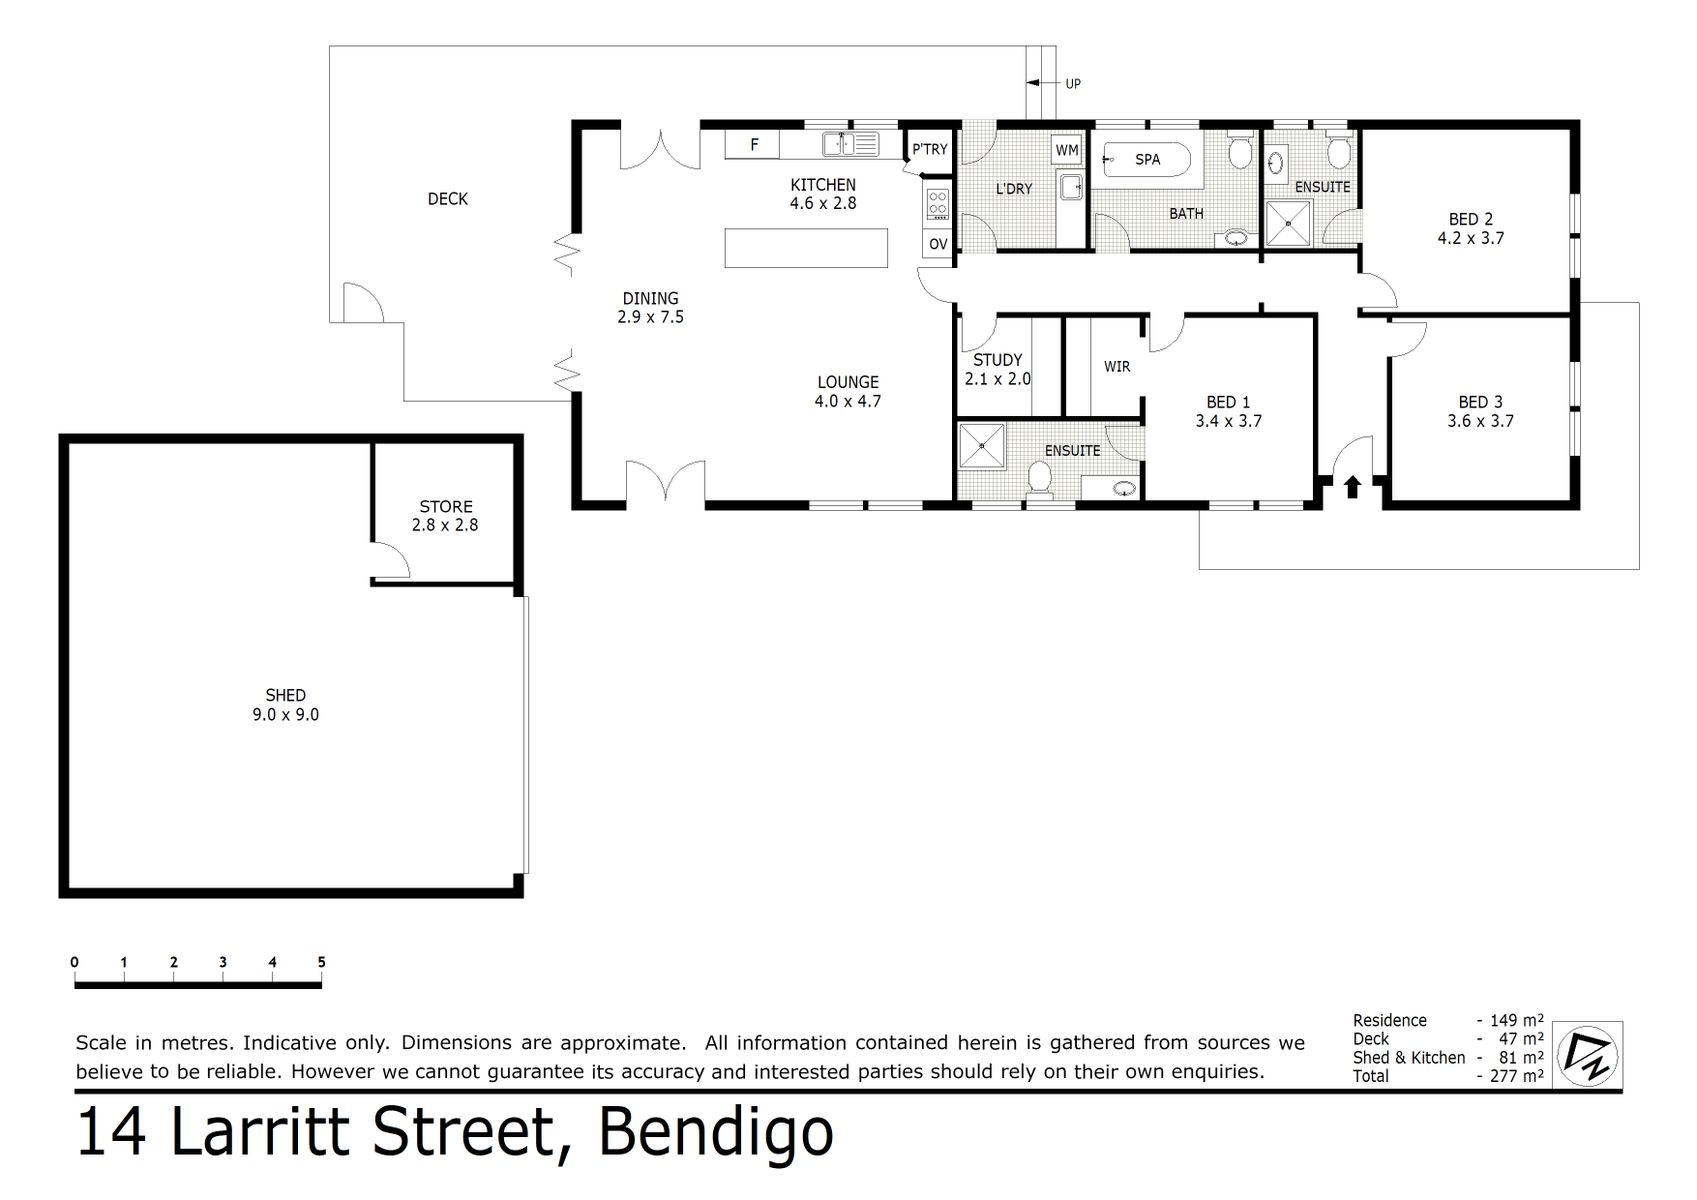 14 Larritt Street Bendigo (04 AUG 2021) 149sqm (1)